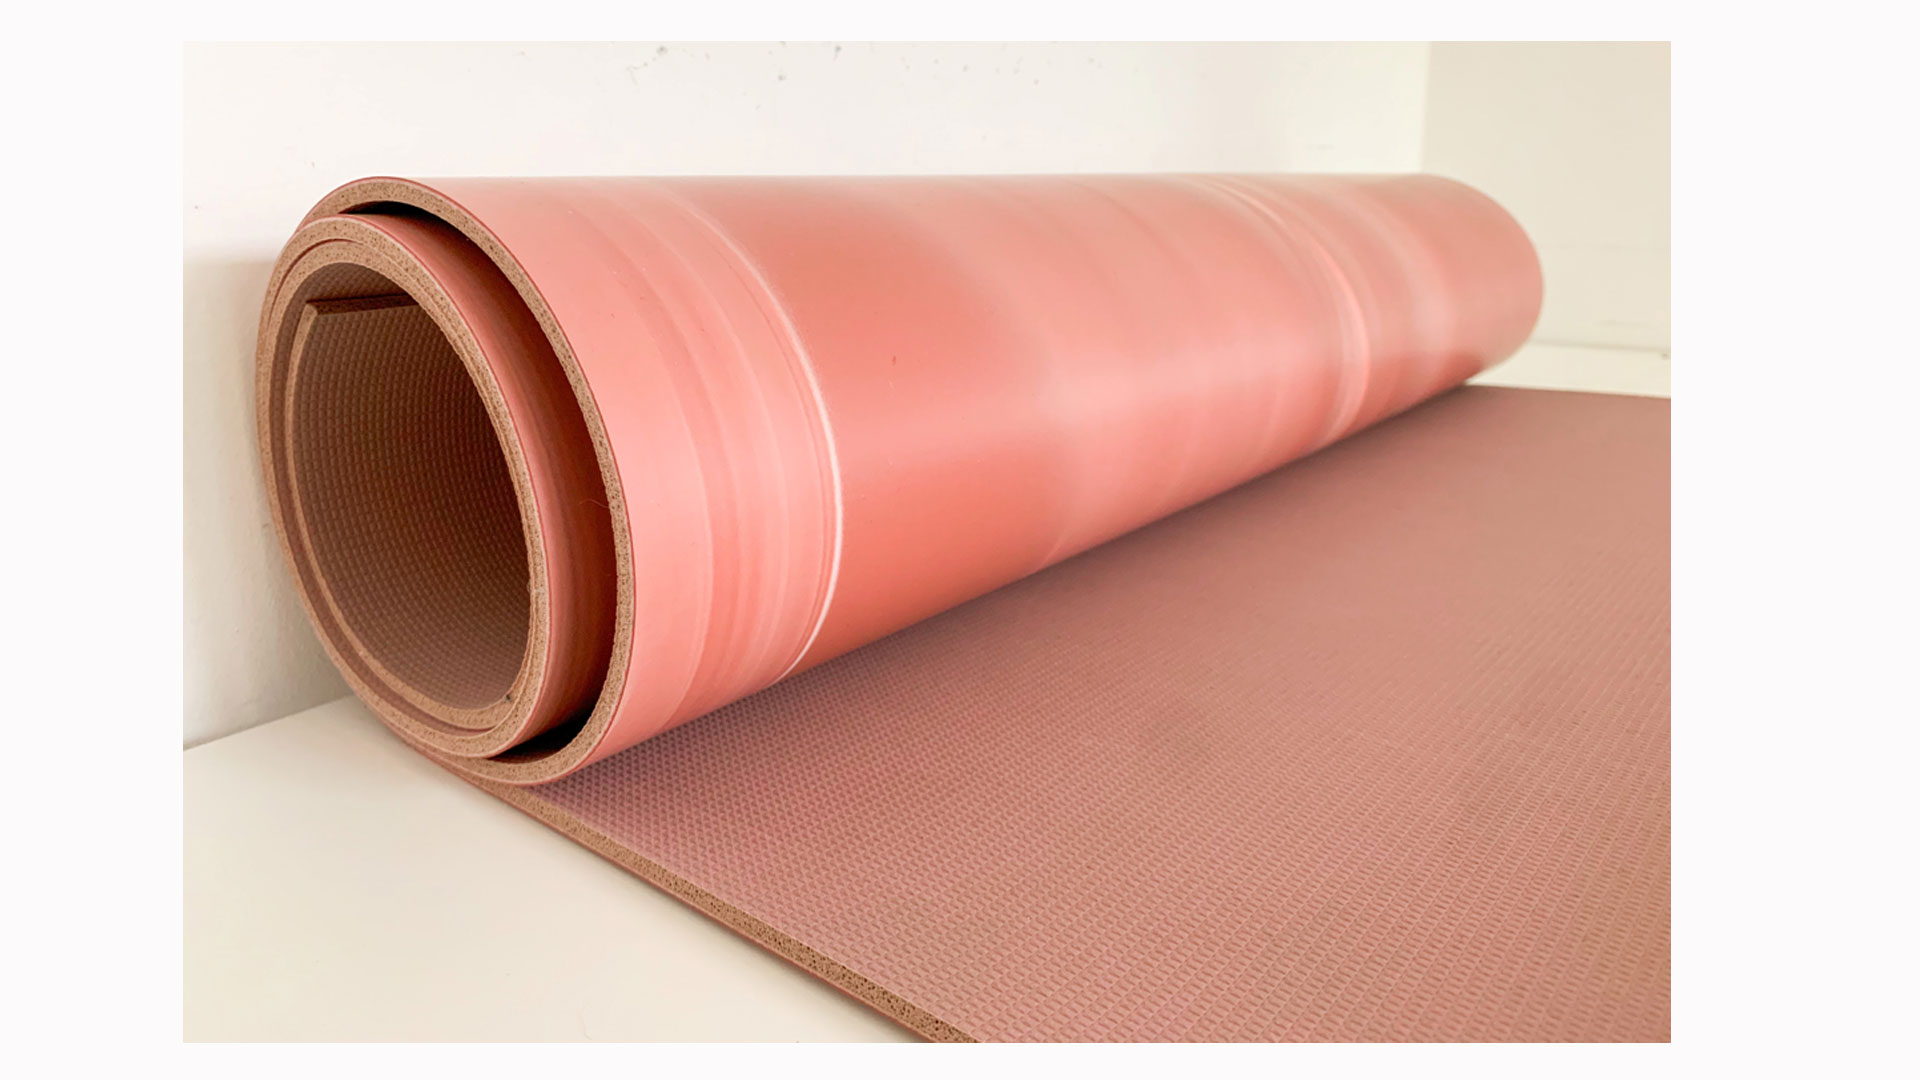 Image shows a half-unrolled pink Lululemon Reversible 5mm Yoga Mat.